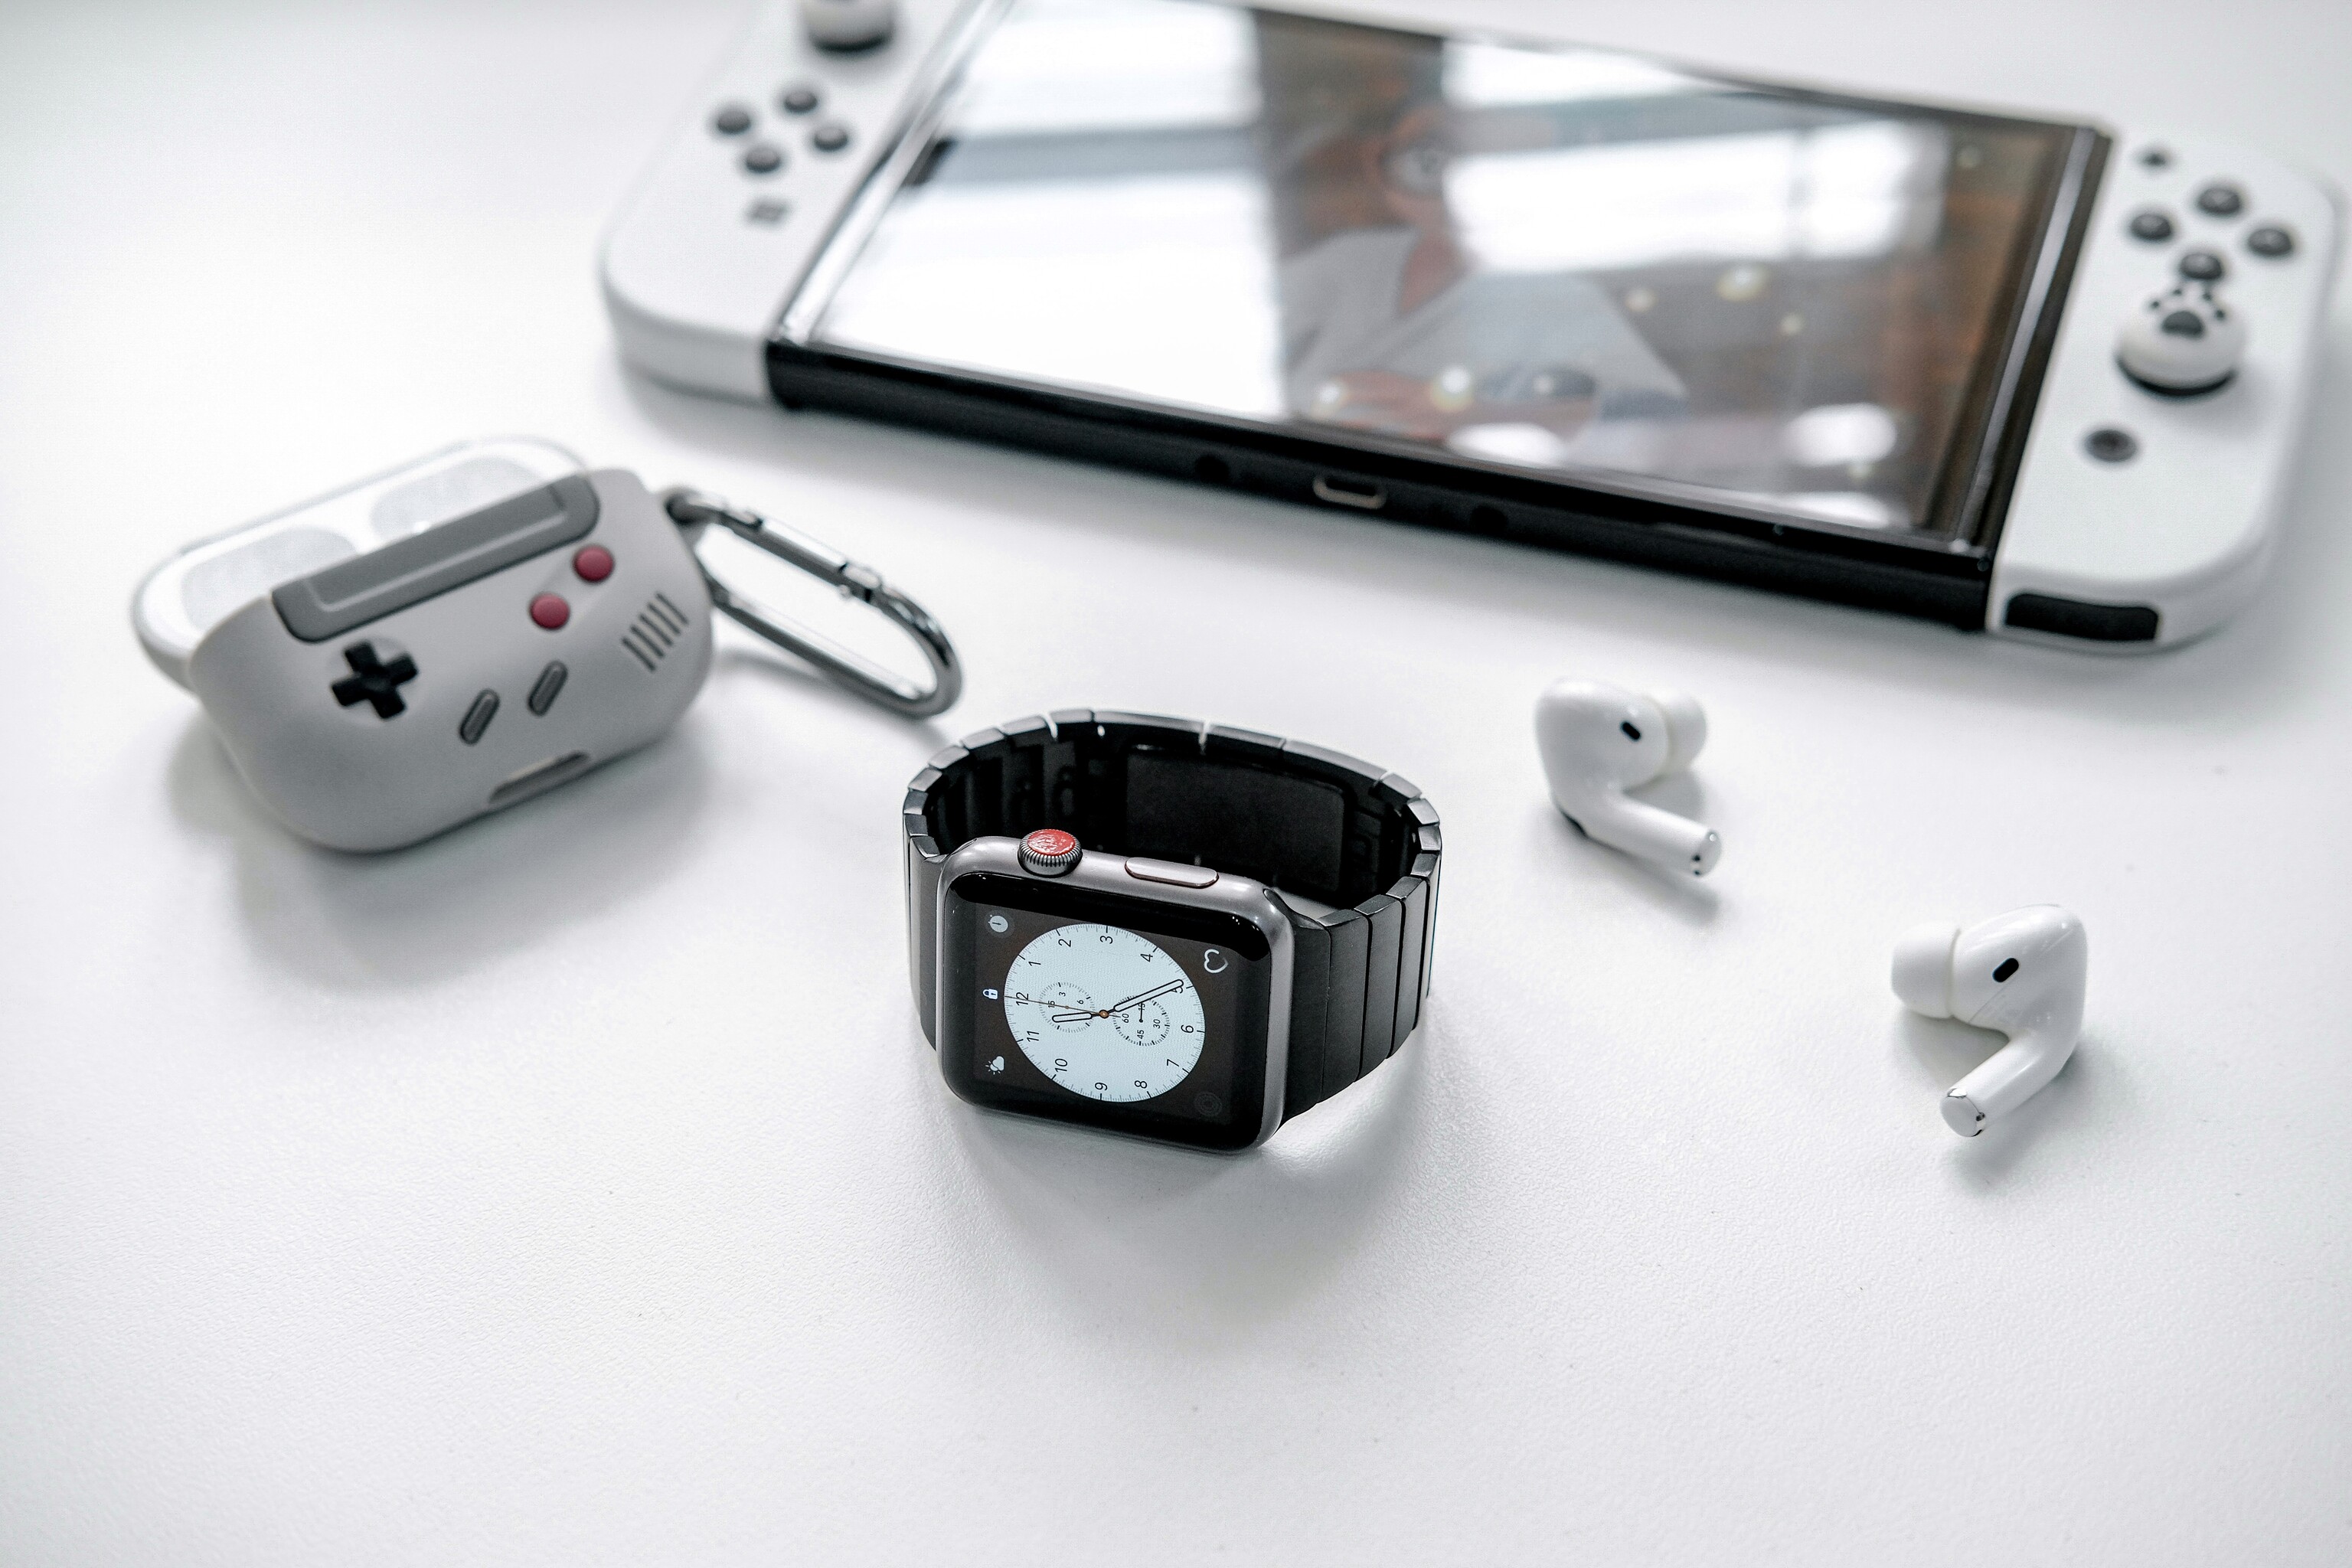 Chia sẻ kỷ niệm về Apple Watch